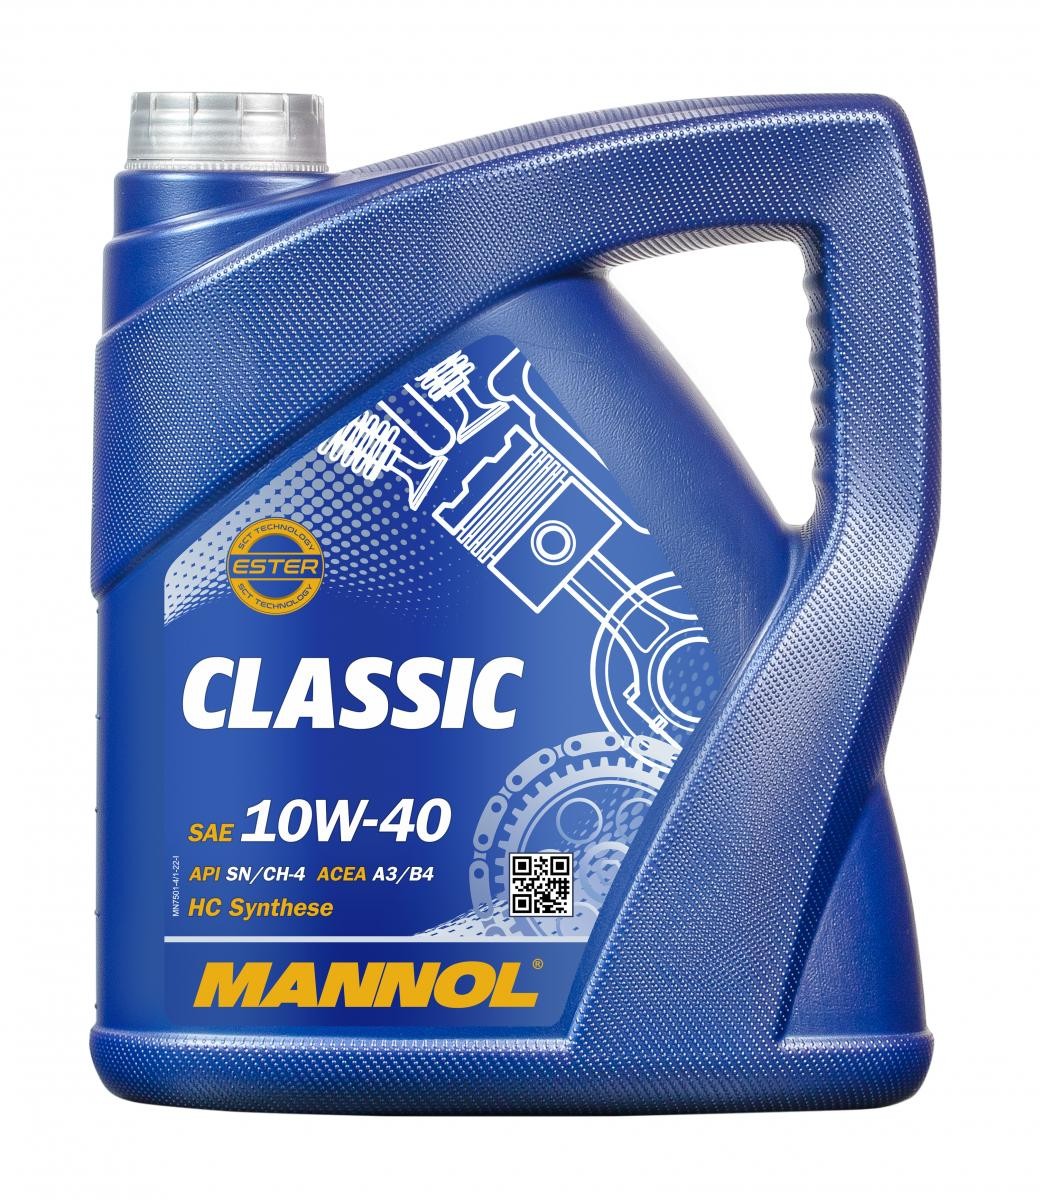 MANNOL ContiClassic MN7501-4 Moottoriöljy 10W-40, 4l, Osasynteettinen öljy